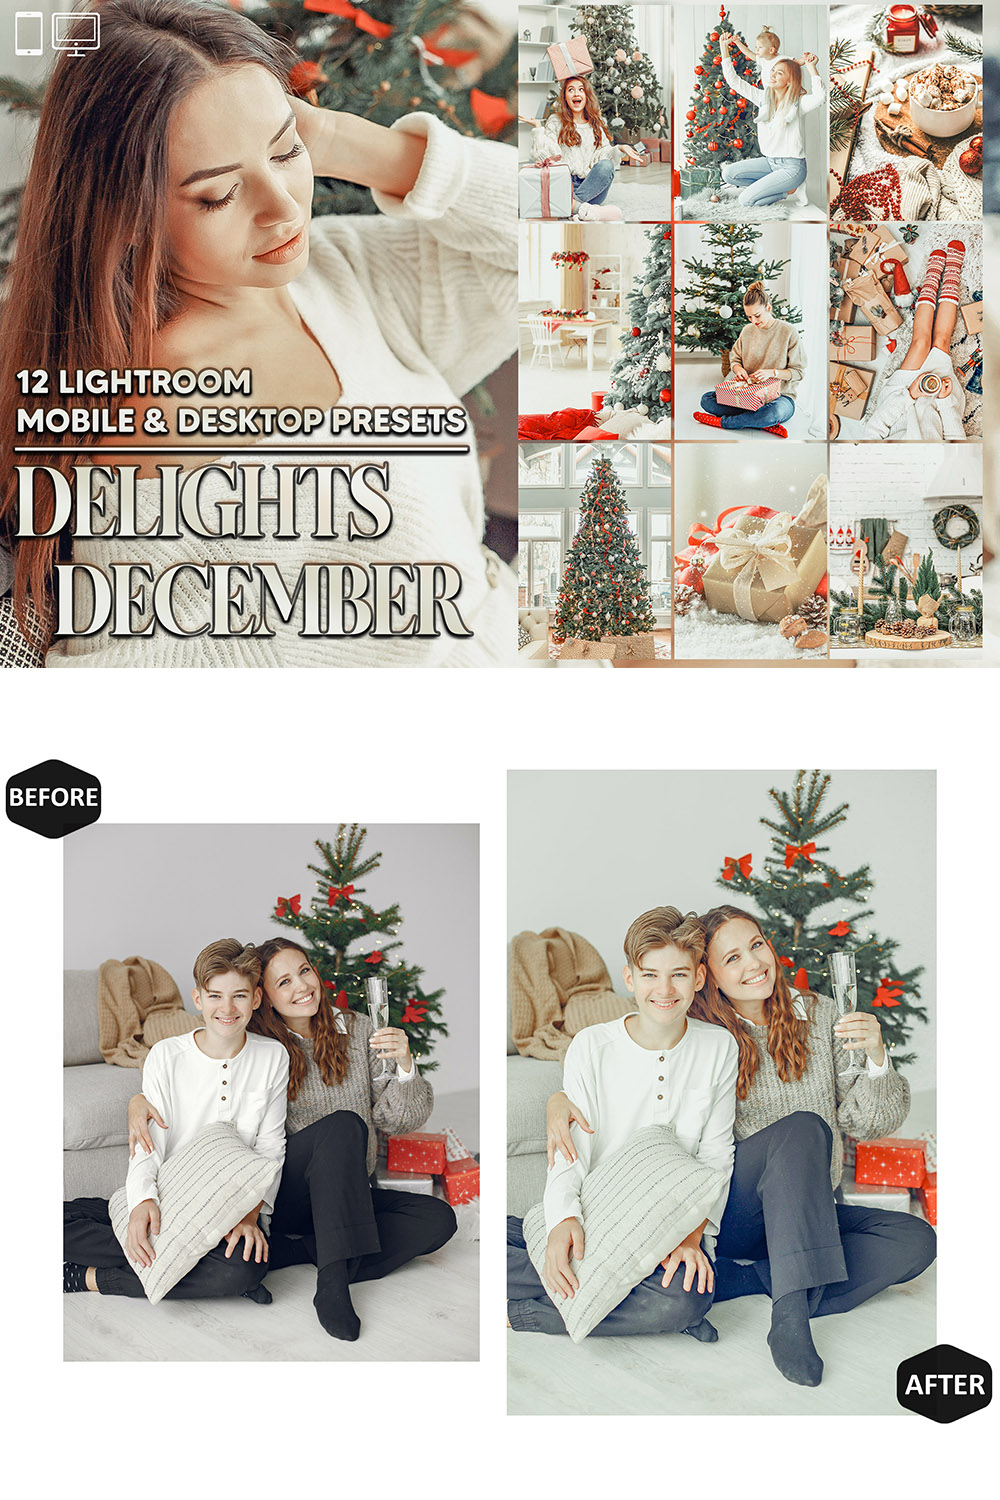 12 Delights December Lightroom Presets, Christmas Mobile Preset, White Xmas Desktop LR Filter Scheme Lifestyle Theme For Portrait, Instagram pinterest preview image.